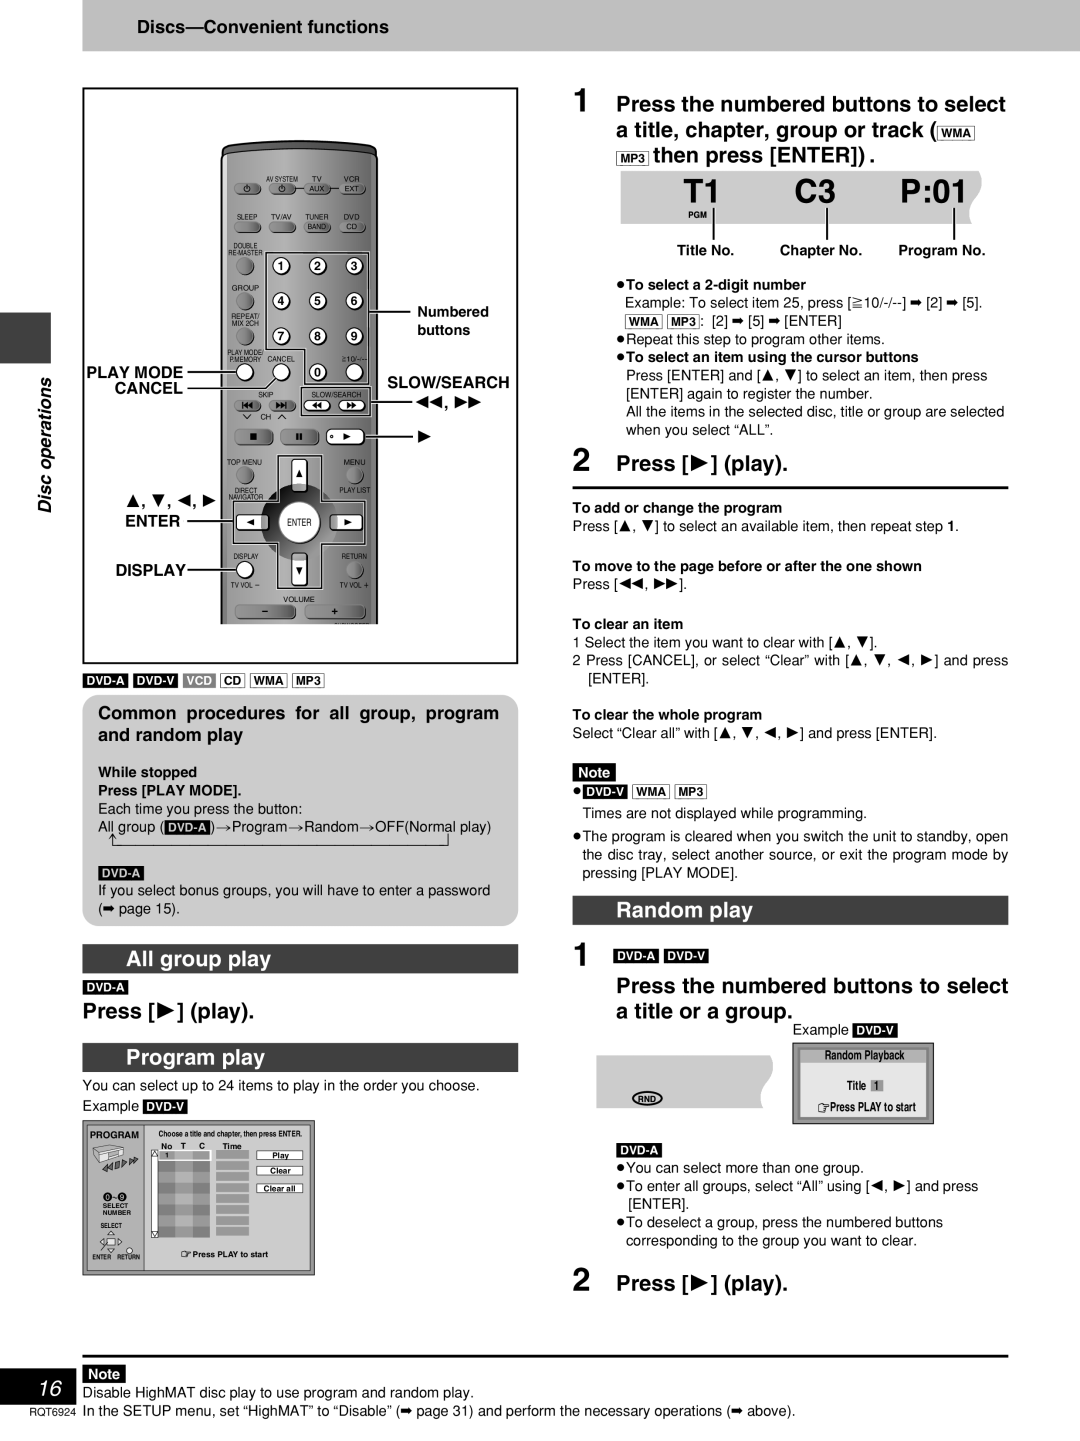 Panasonic SC-DT310 manual All group play, Program play, Press 1 play, Random play, Disc 